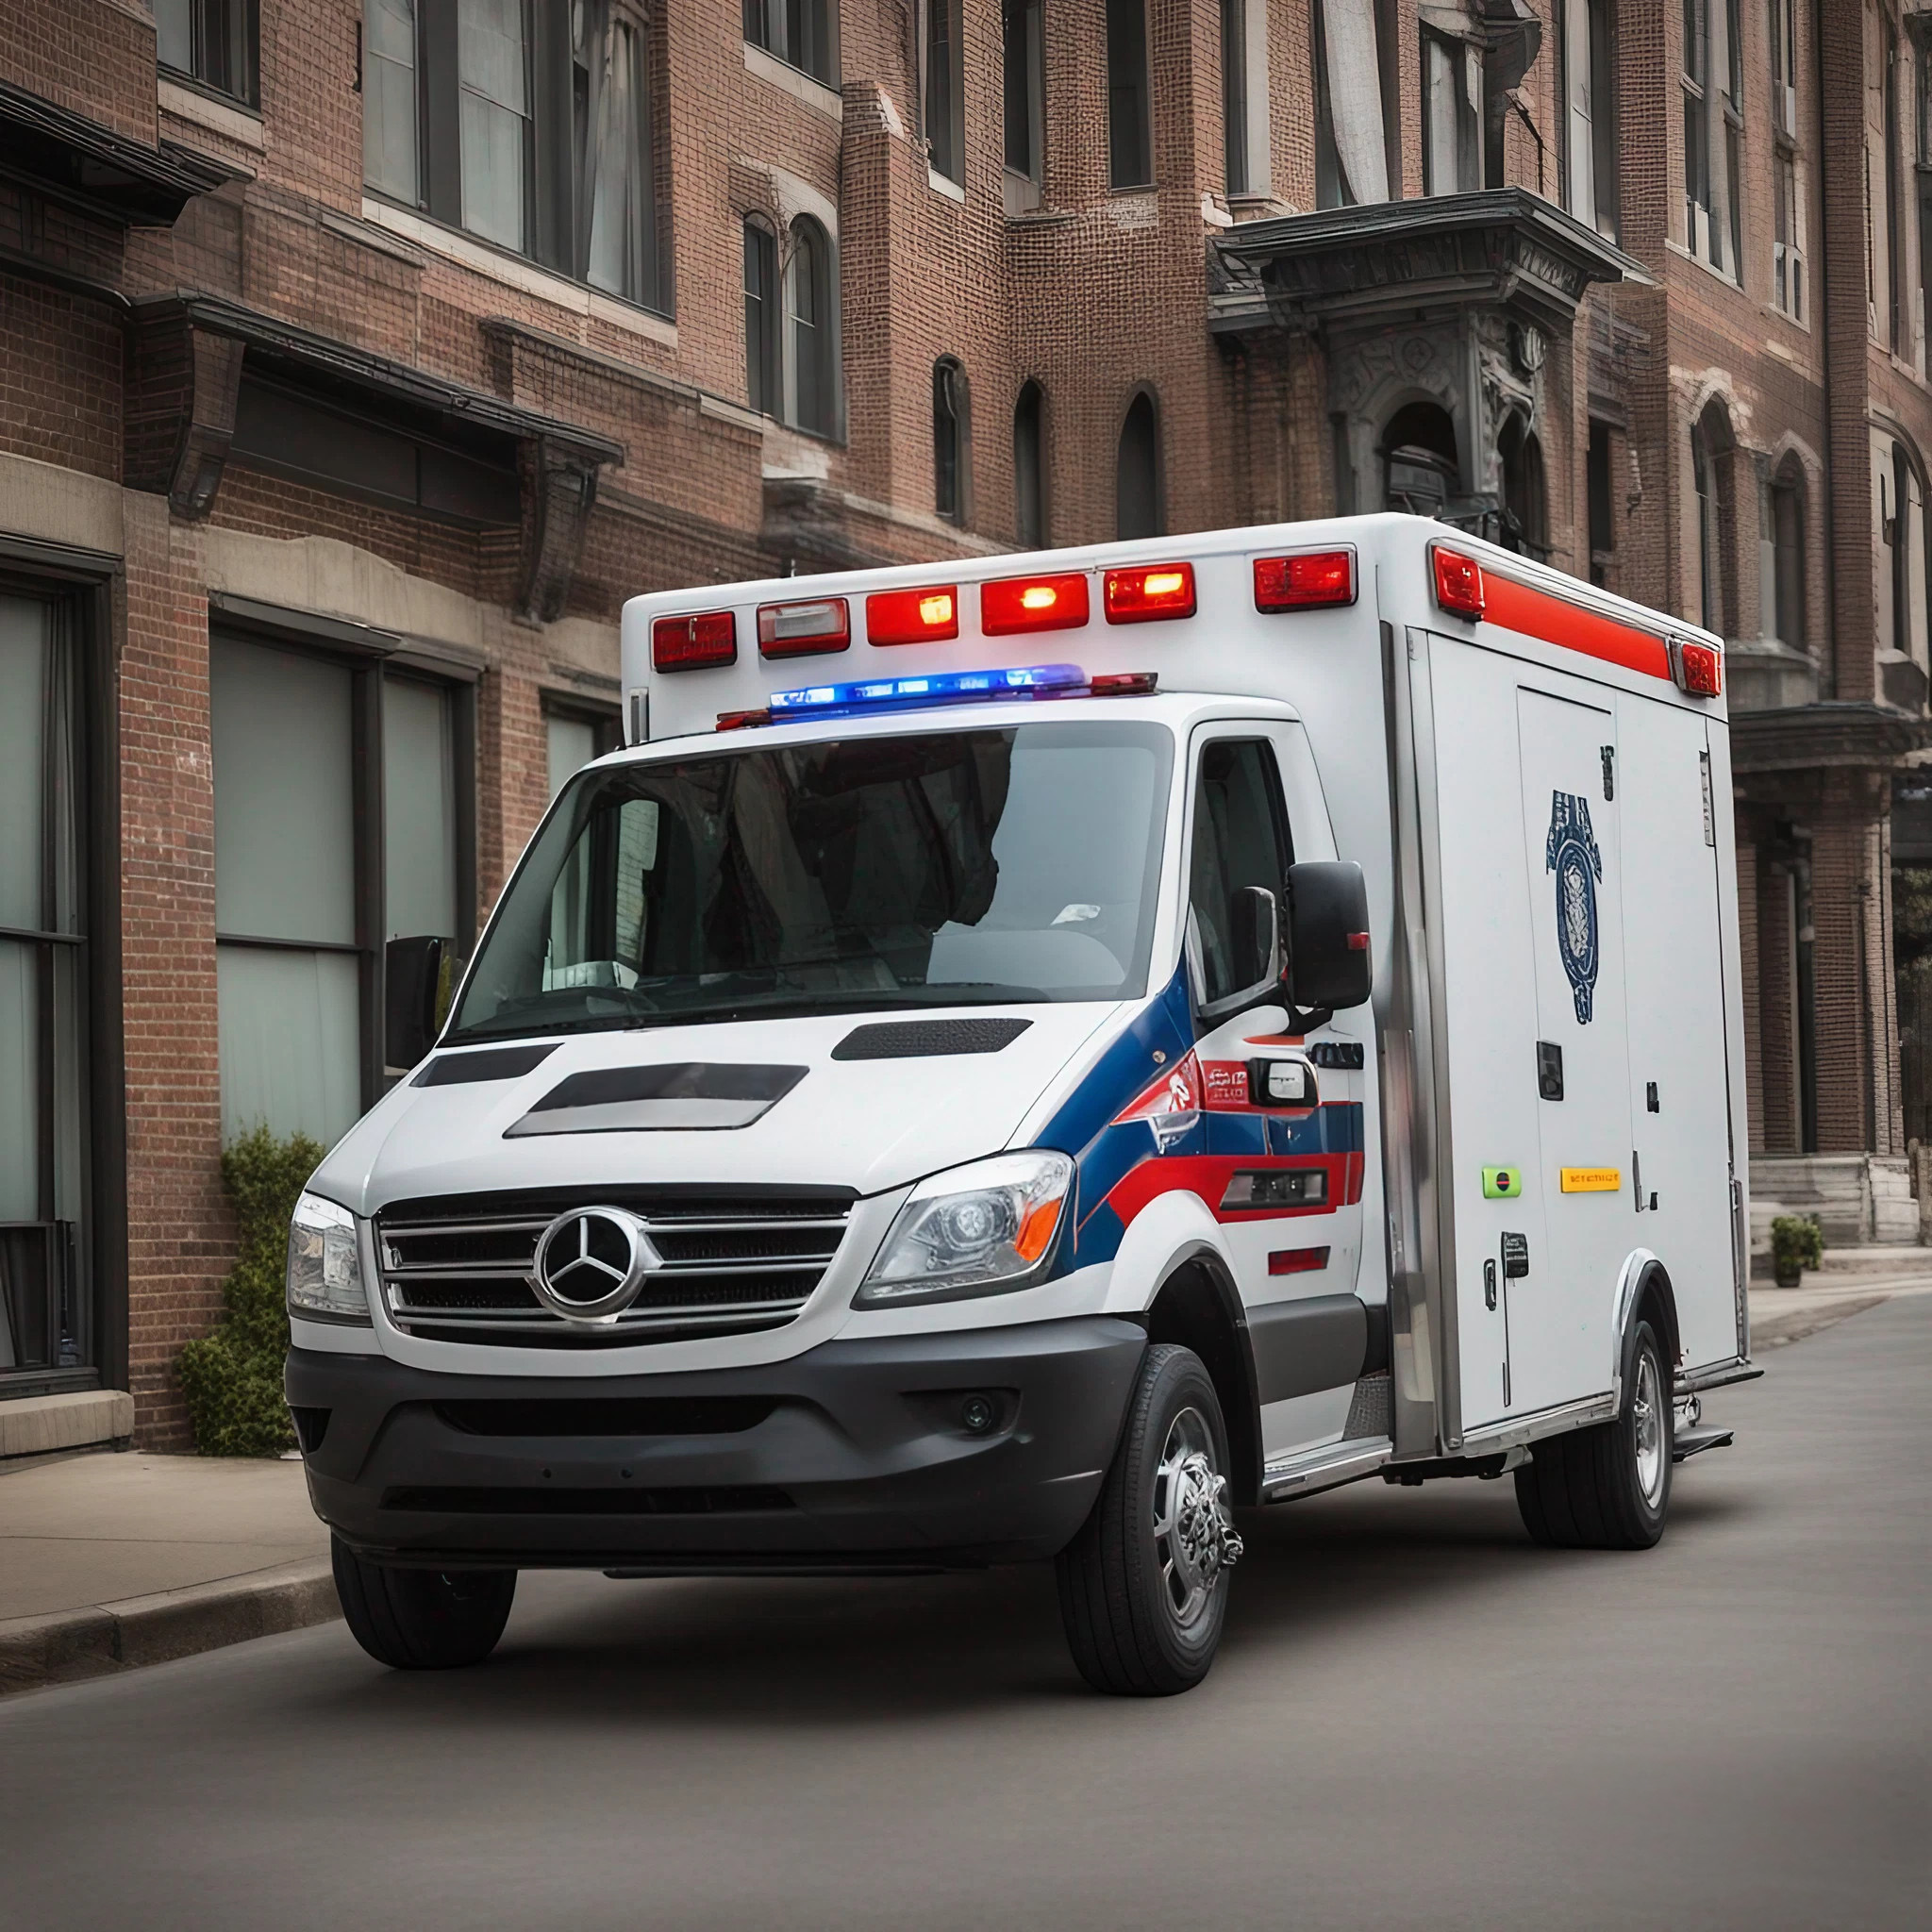 Emergency Response Vehicle in Urban Area - White